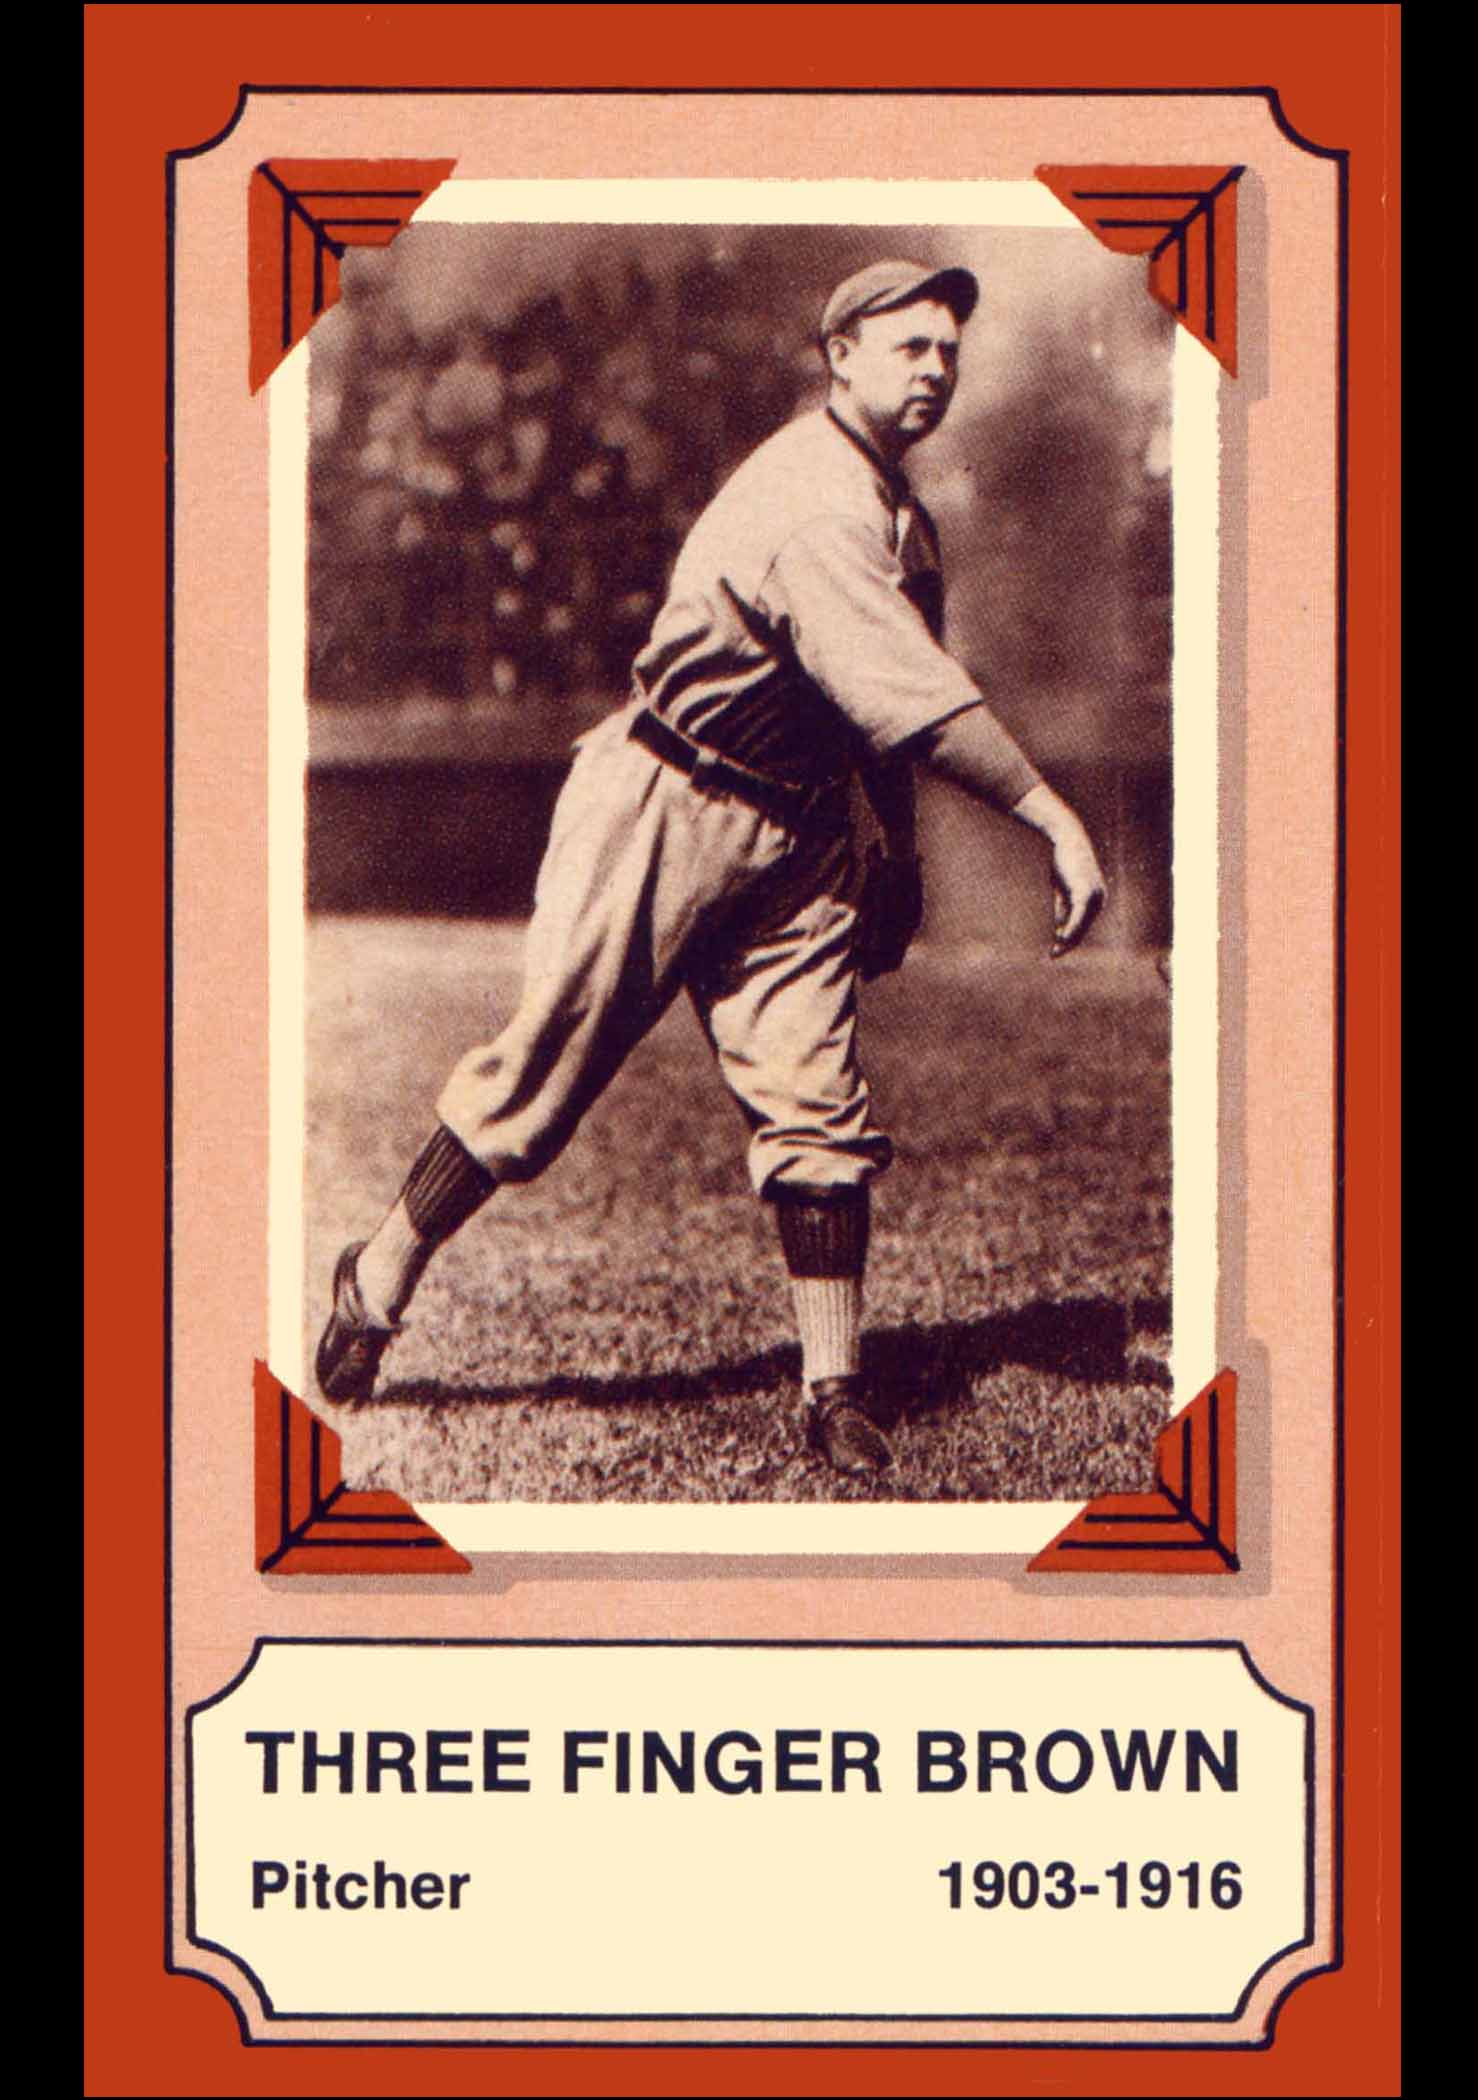 Three Finger Brown, Chicago Cubs, baseball card portrait]